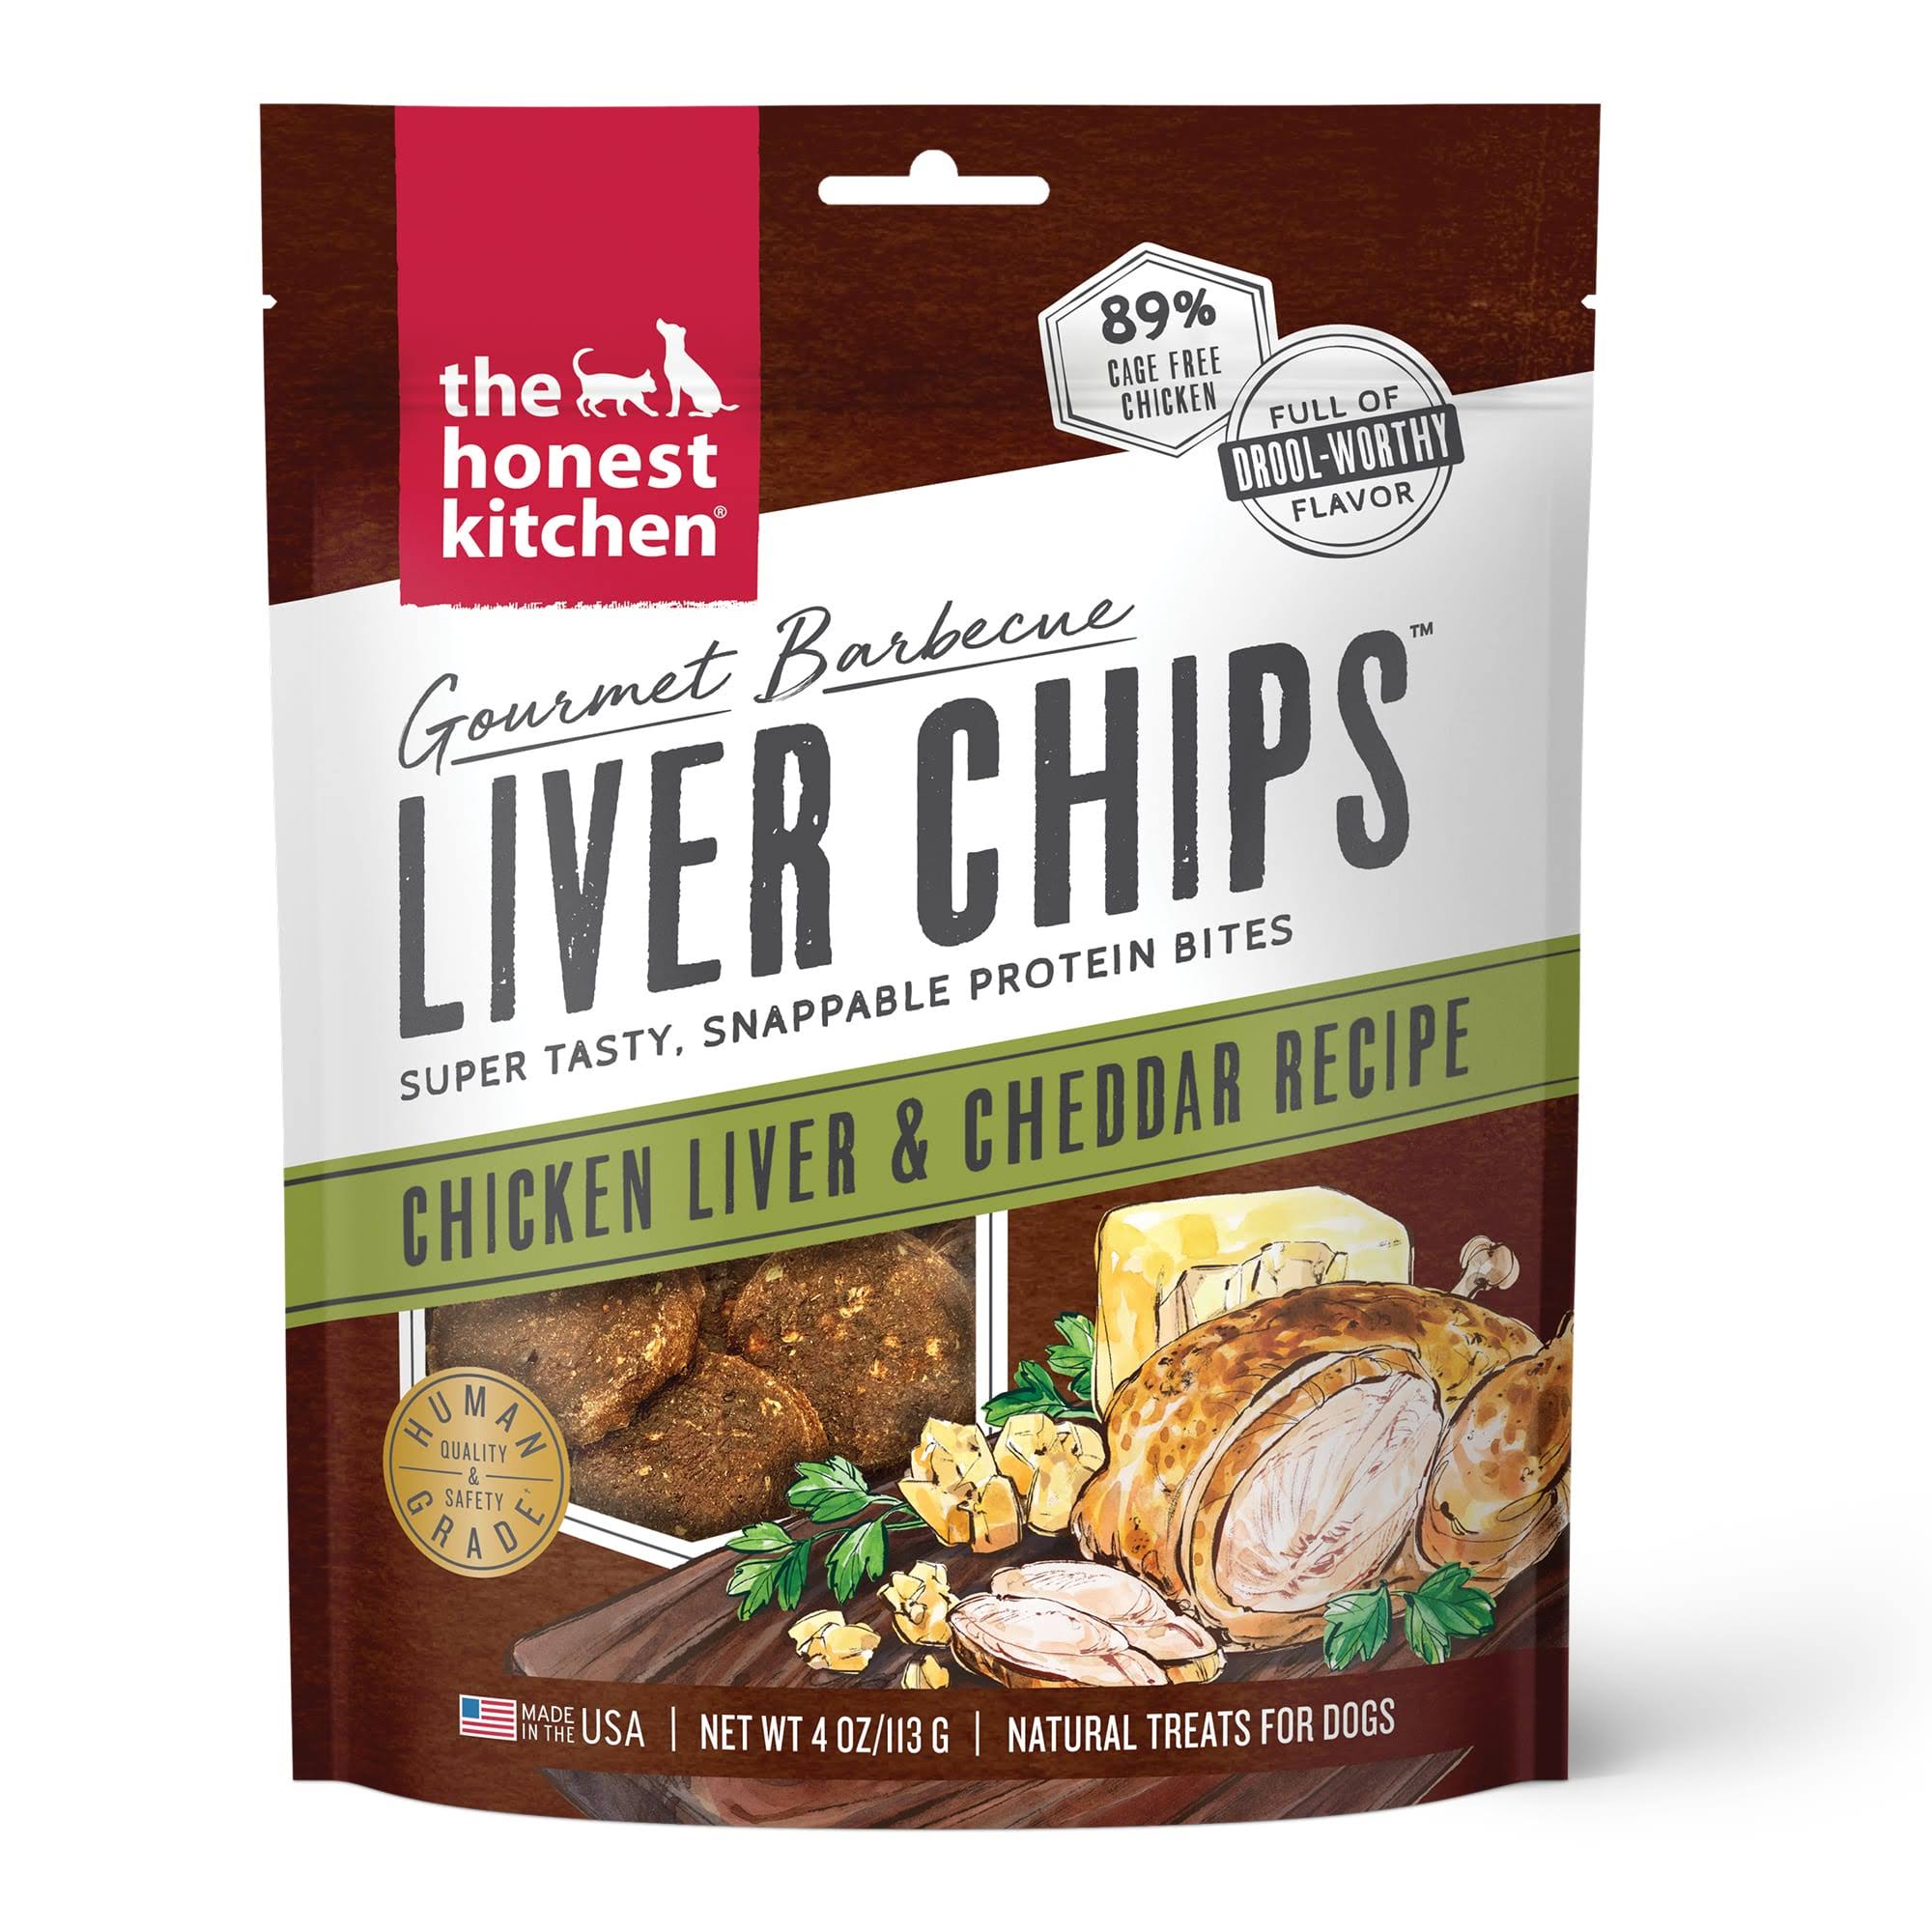 The Honest Kitchen Gourmet Barbecue Liver Chips Chicken Liver & Cheddar Recipe Dog Treats - 4-oz